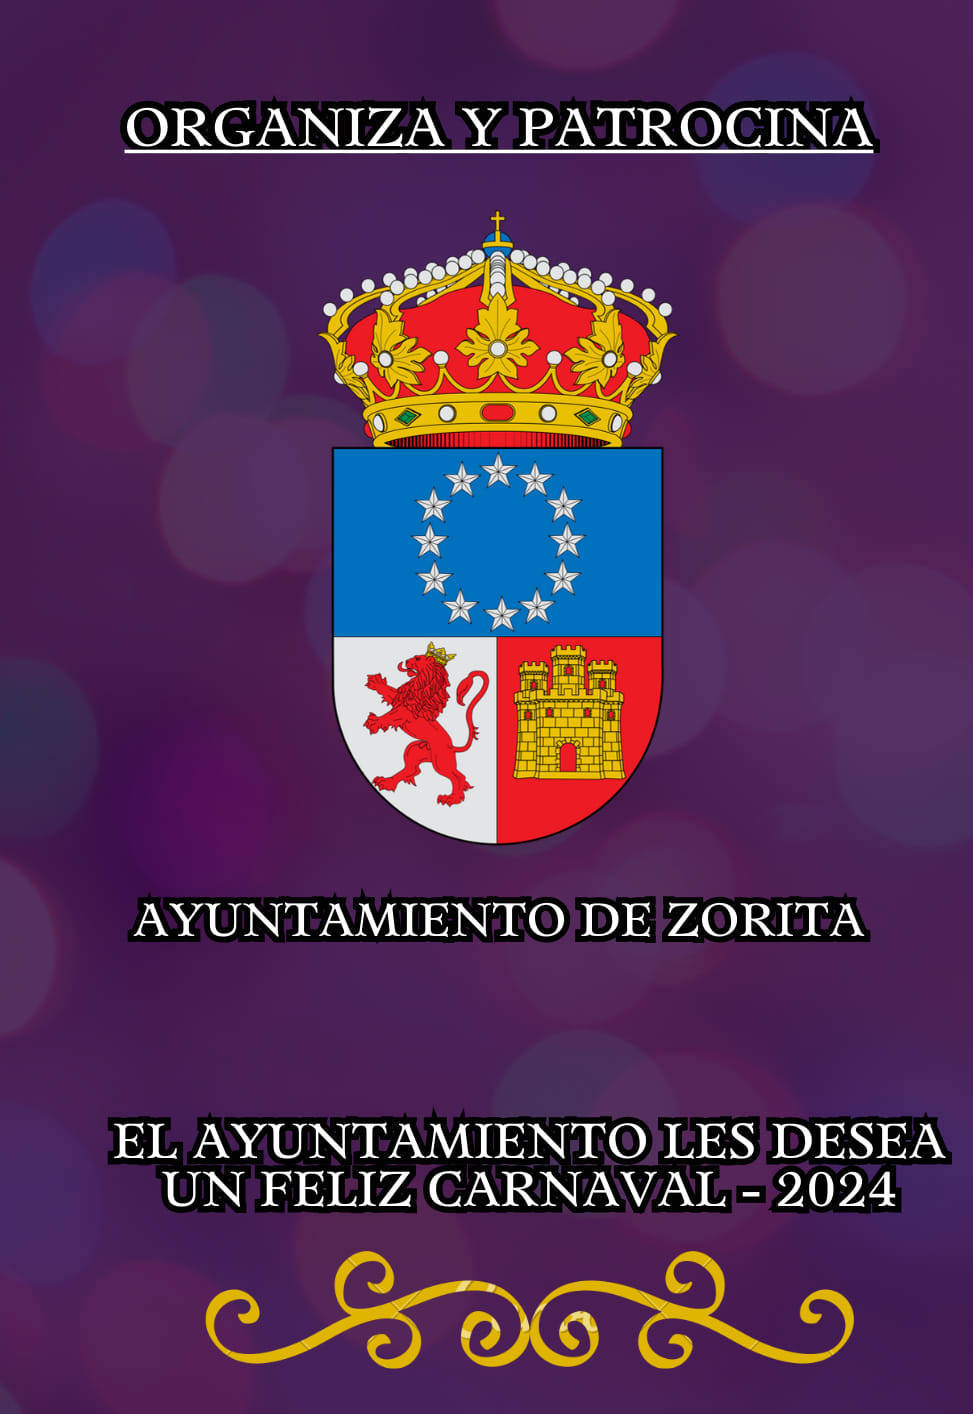 Carnaval (2024) - Zorita (Cáceres) 5